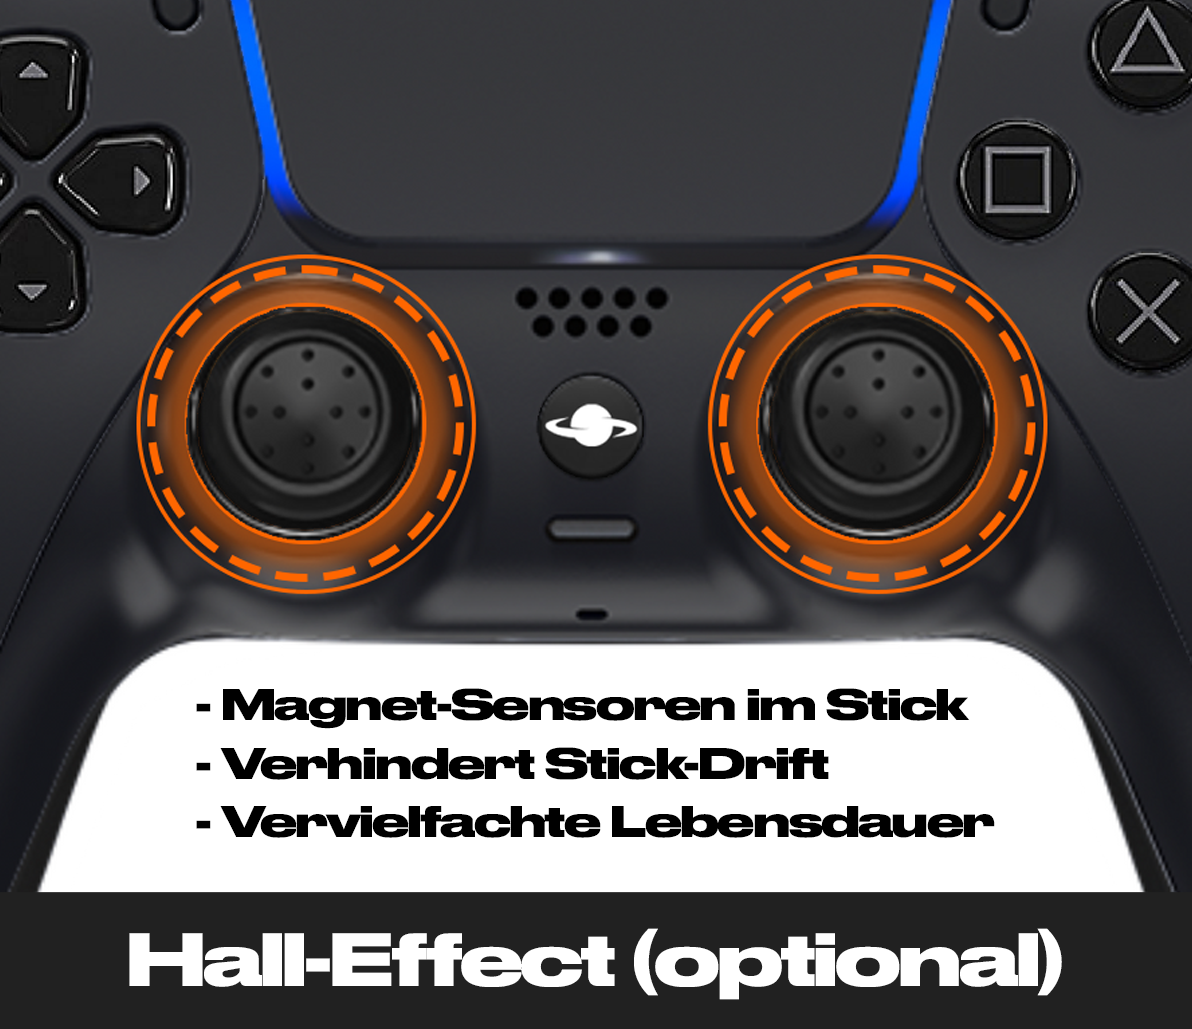 PS5 Custom Controller 'Matcha'